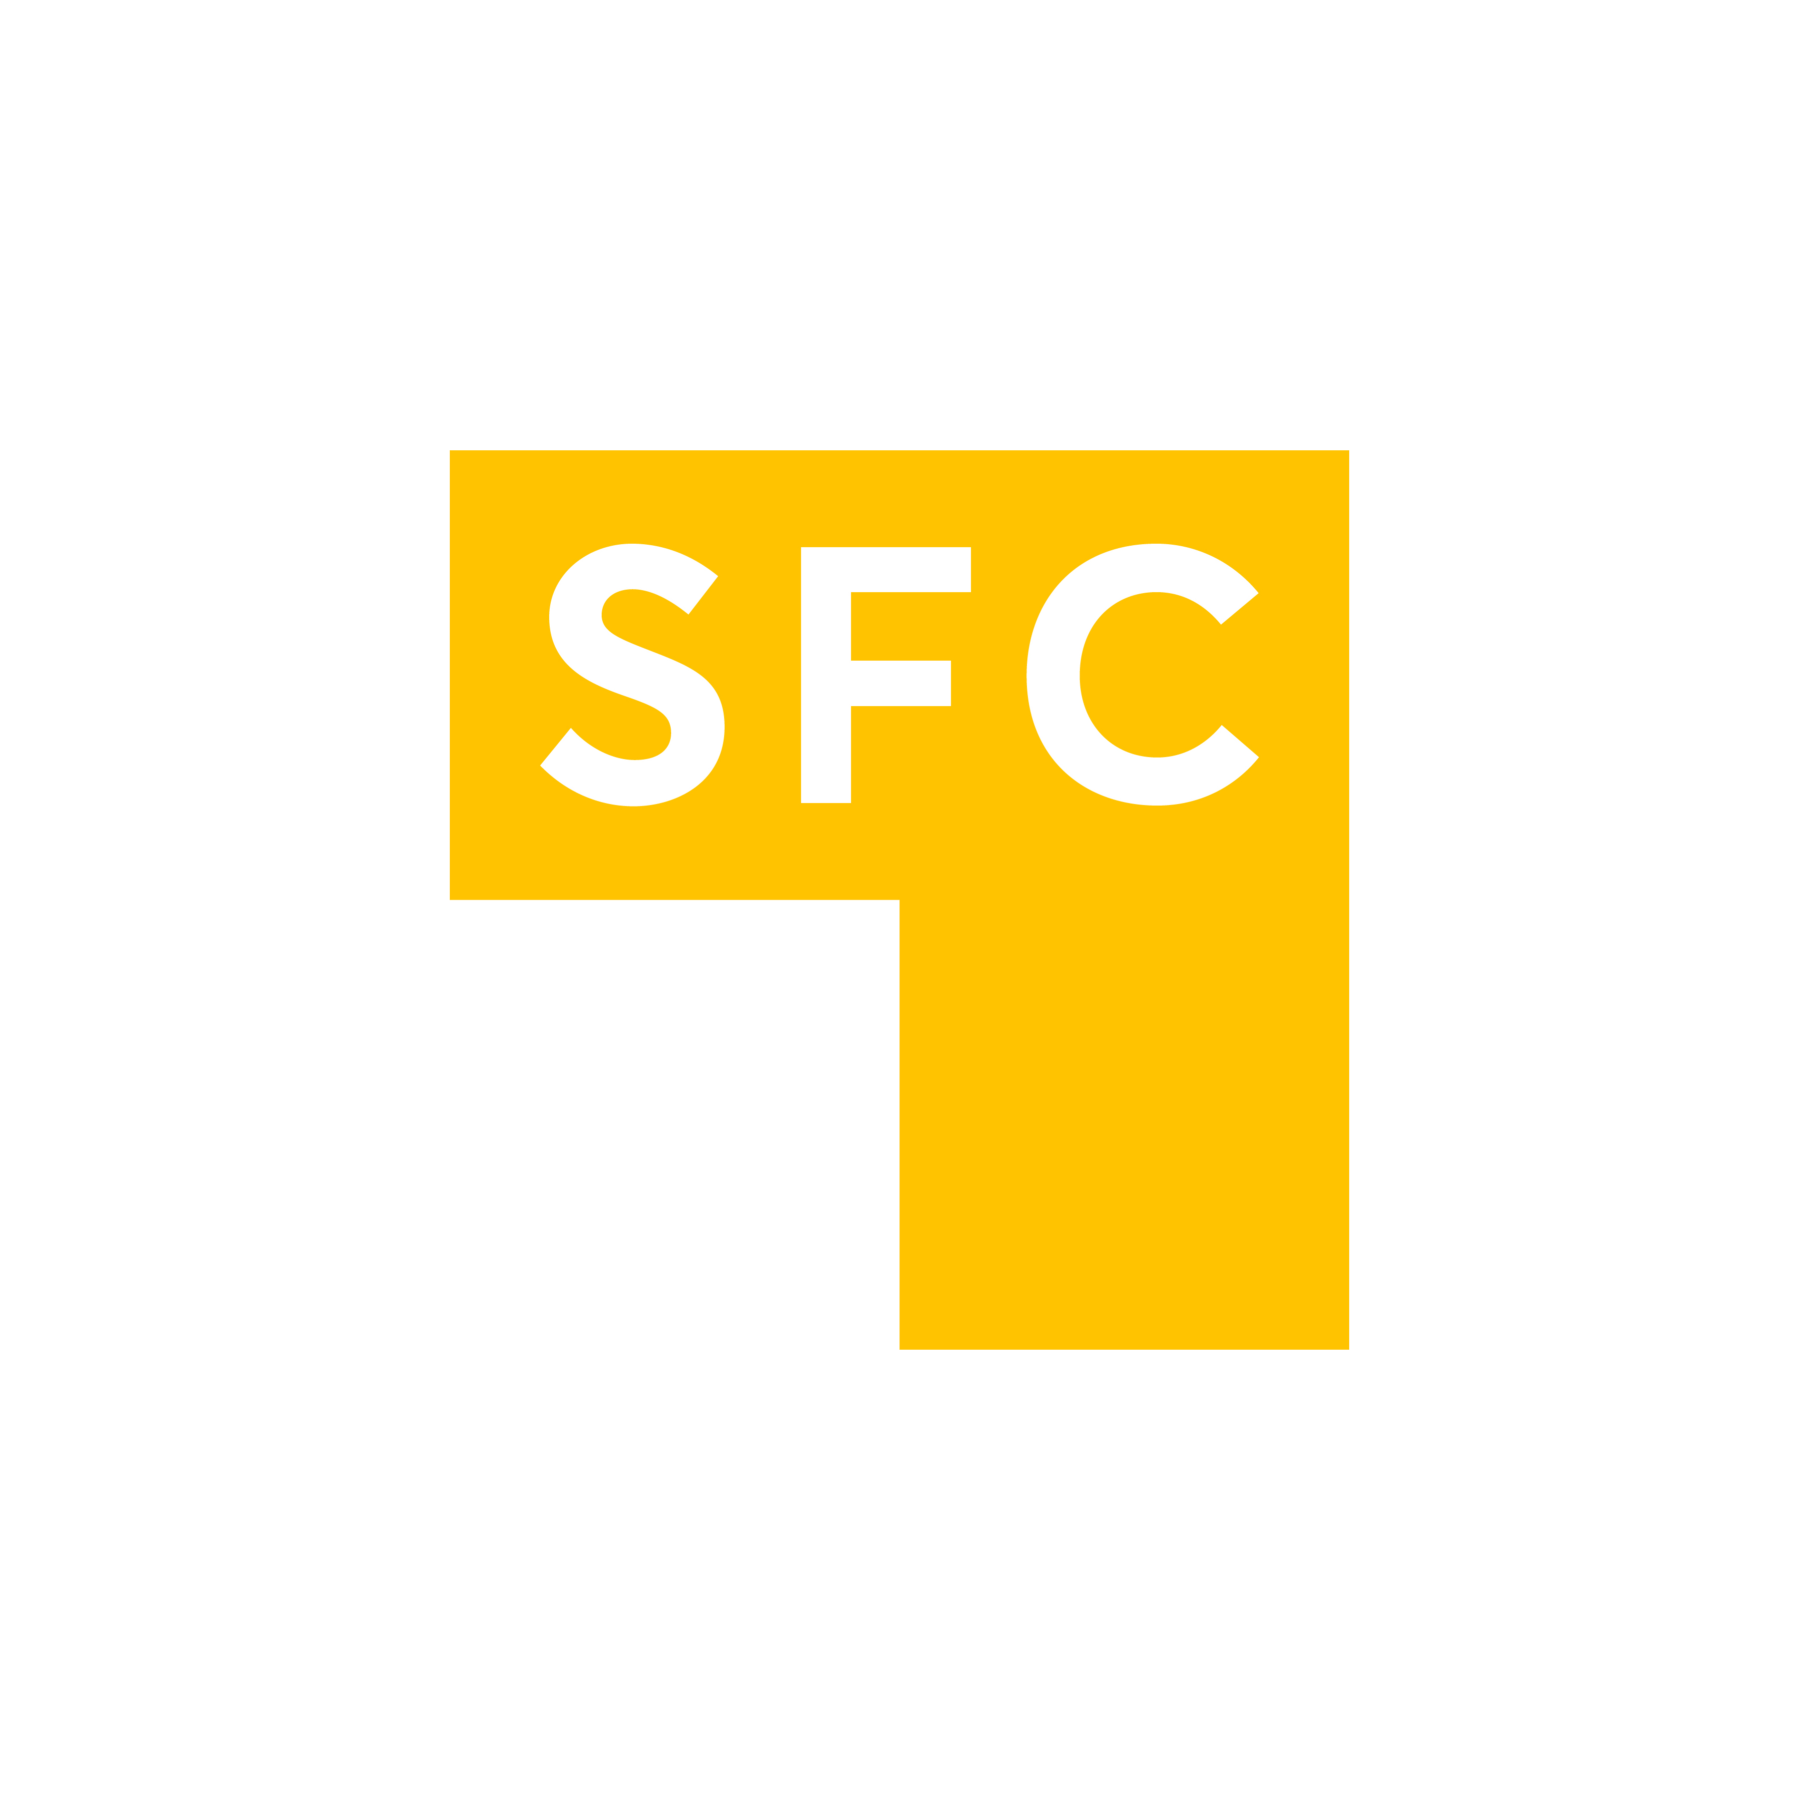 SFC Capital logo